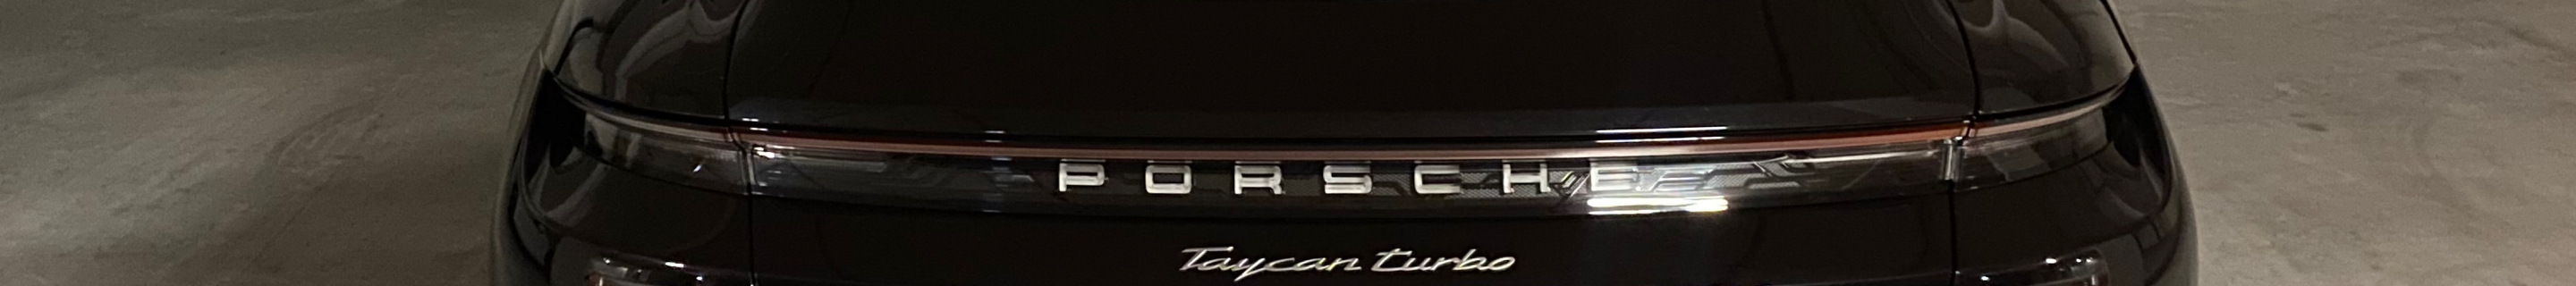 Porsche Taycan Turbo Sport Turismo